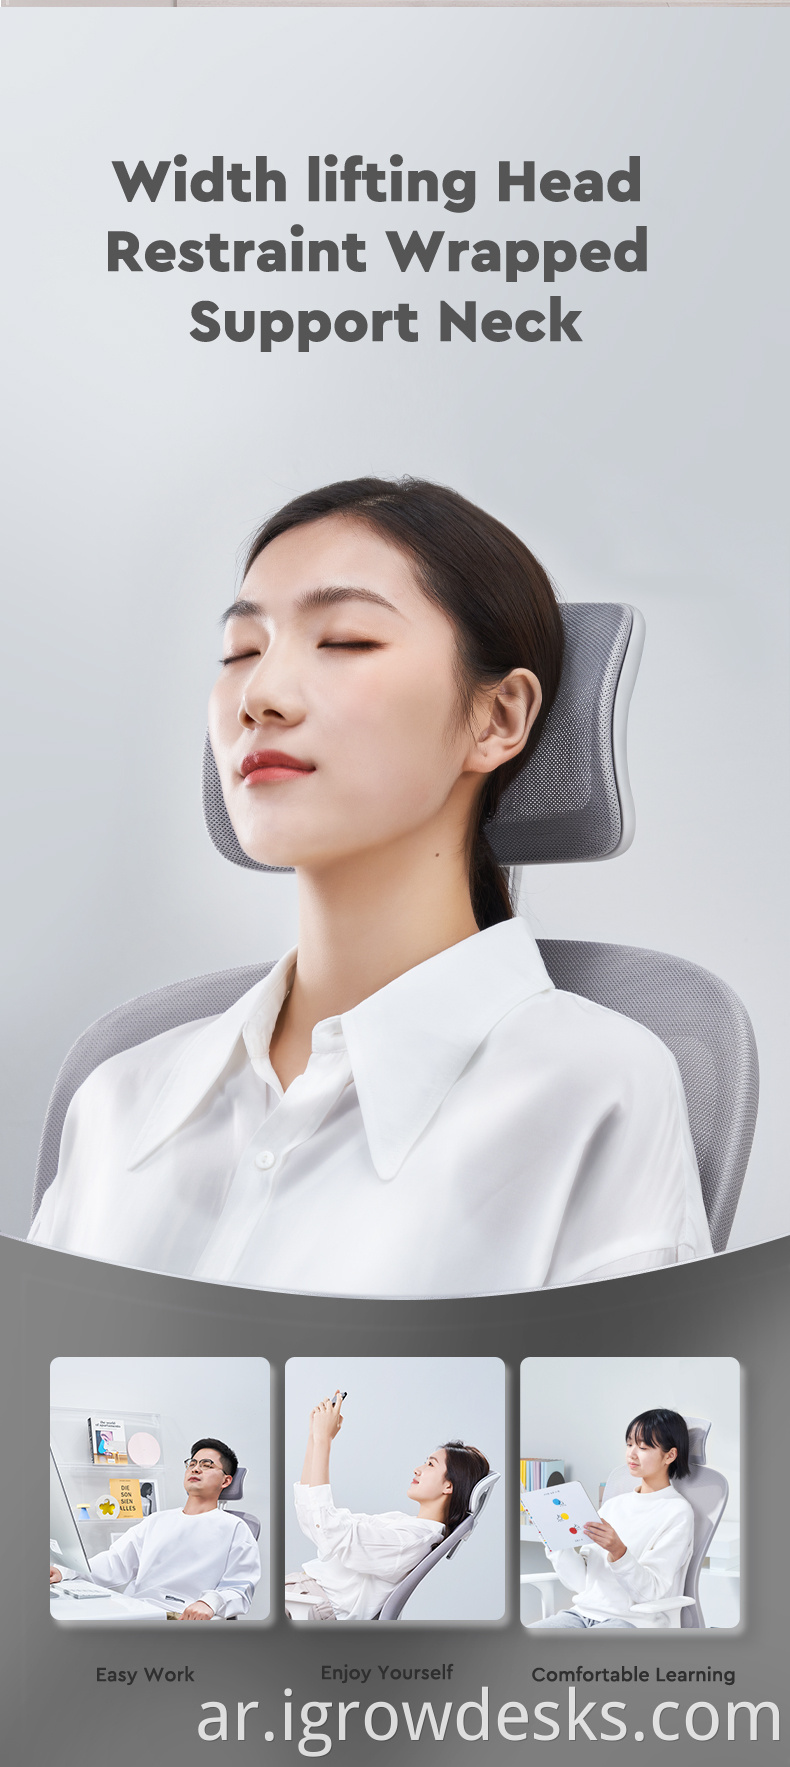 Office Massage Chair